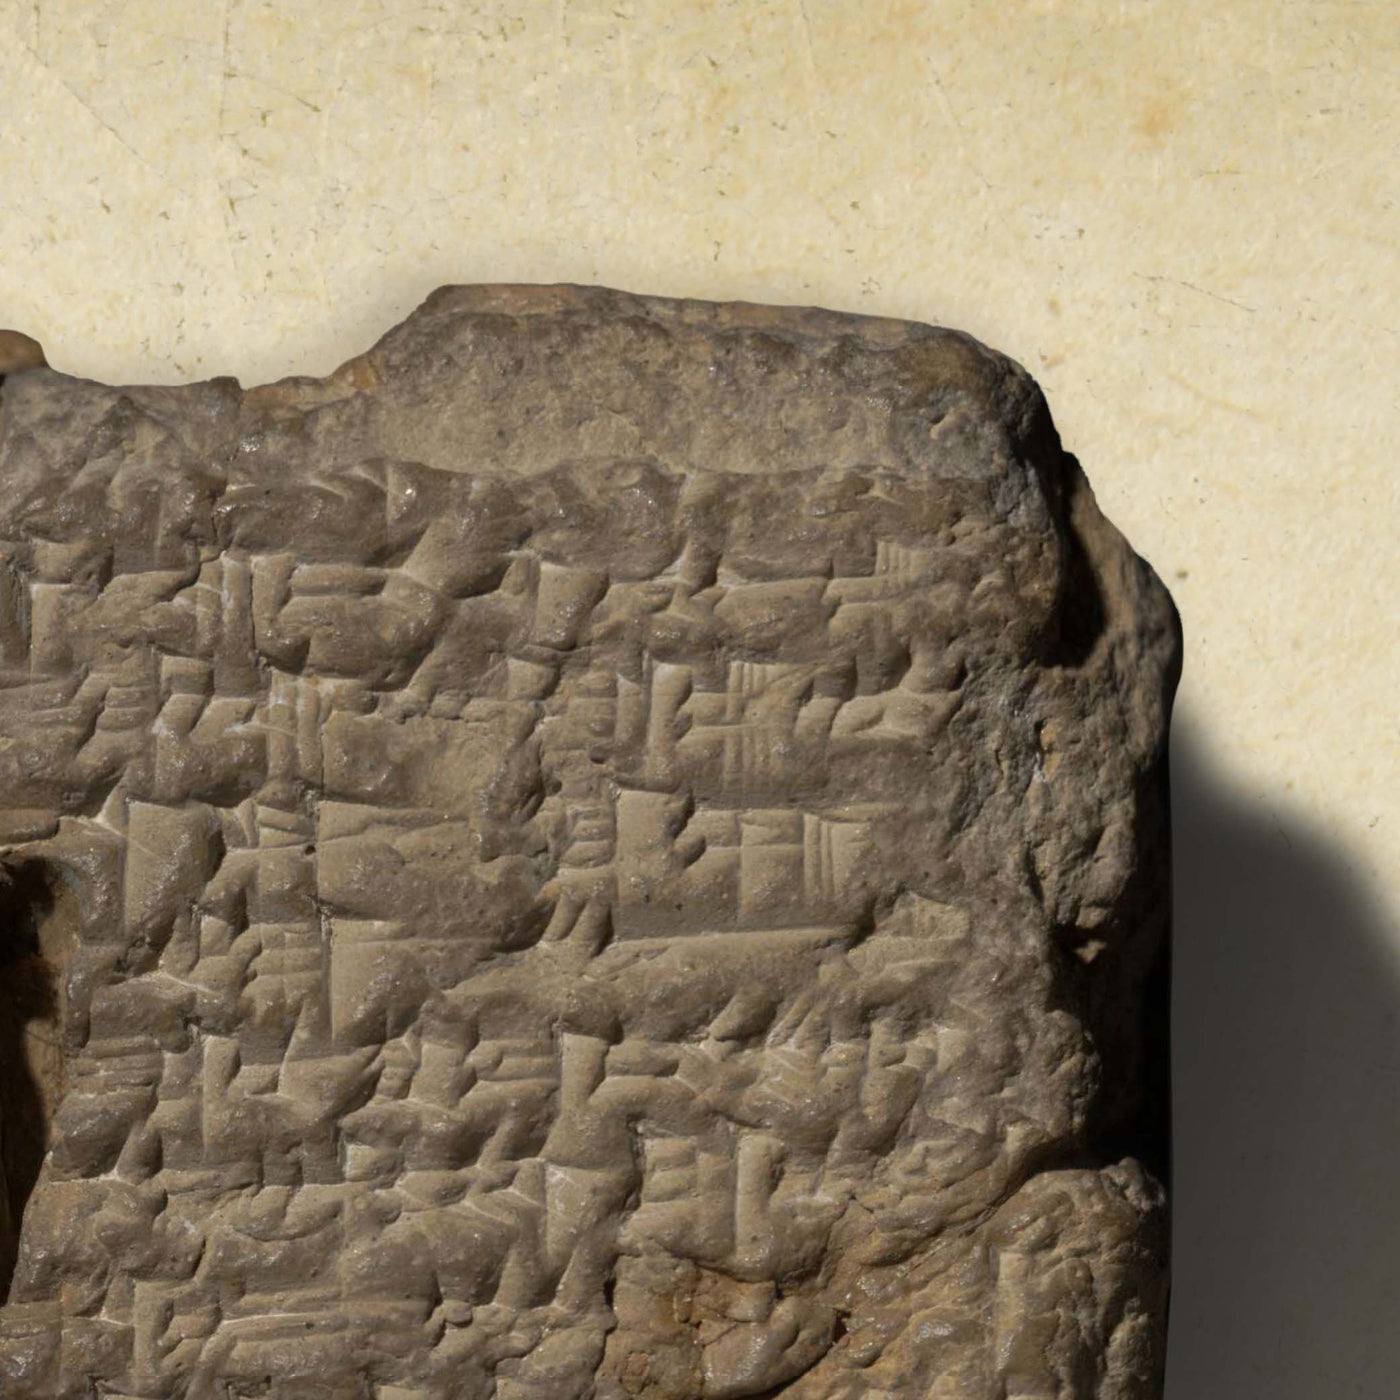 Ancienne carte thématique du monde antique, -600 : Babylone, Nil, mer Méditerranée, Gange, Himalaya